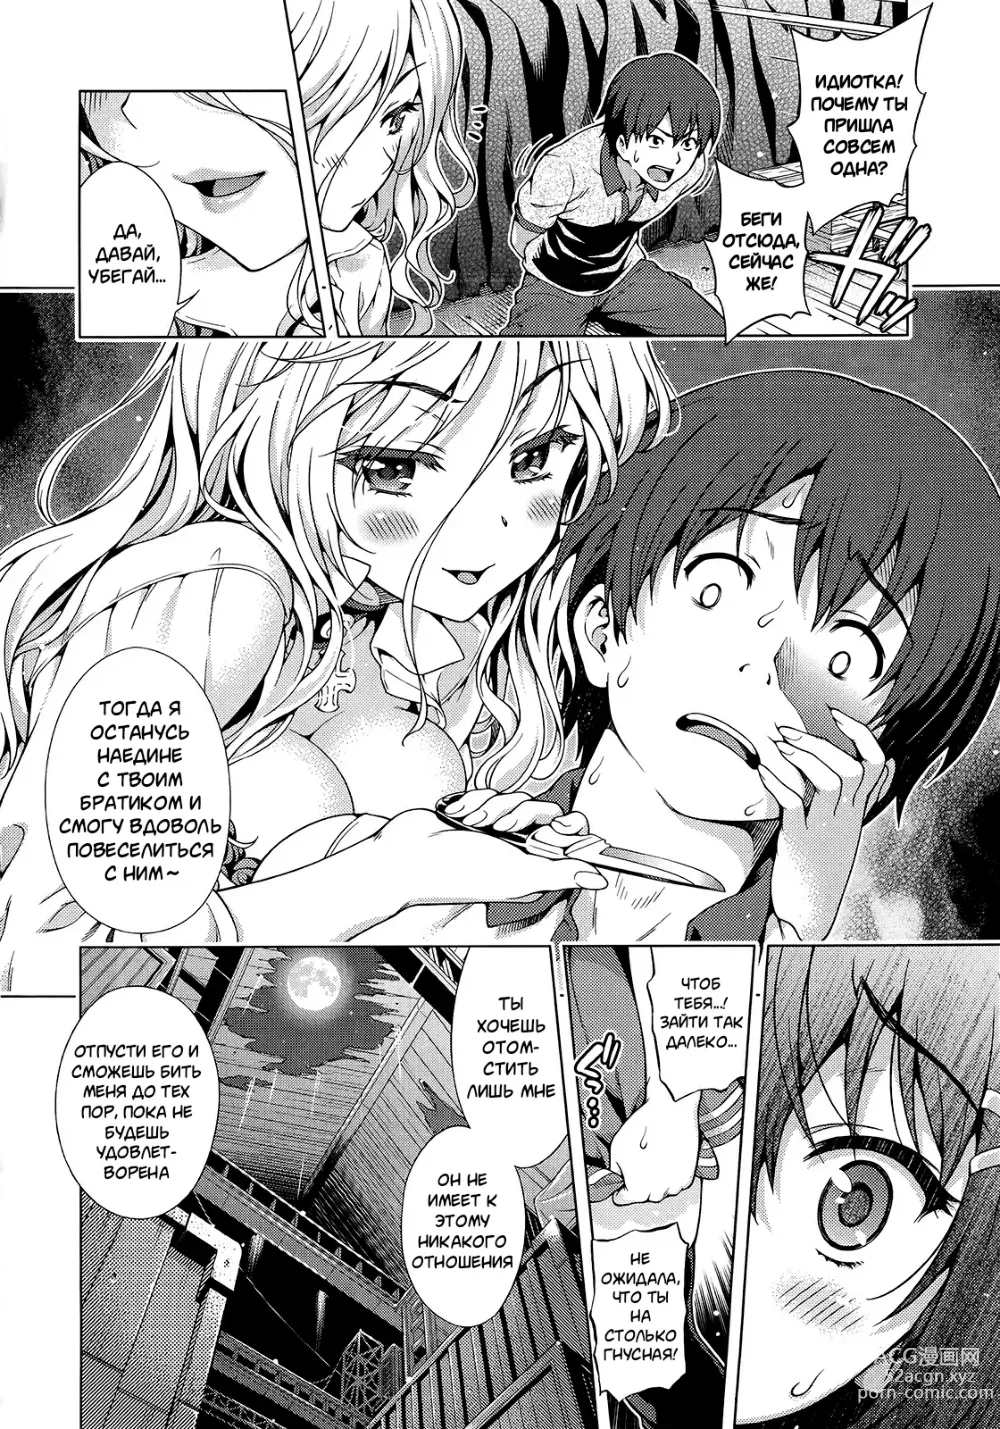 Page 10 of manga Кризис Аой!